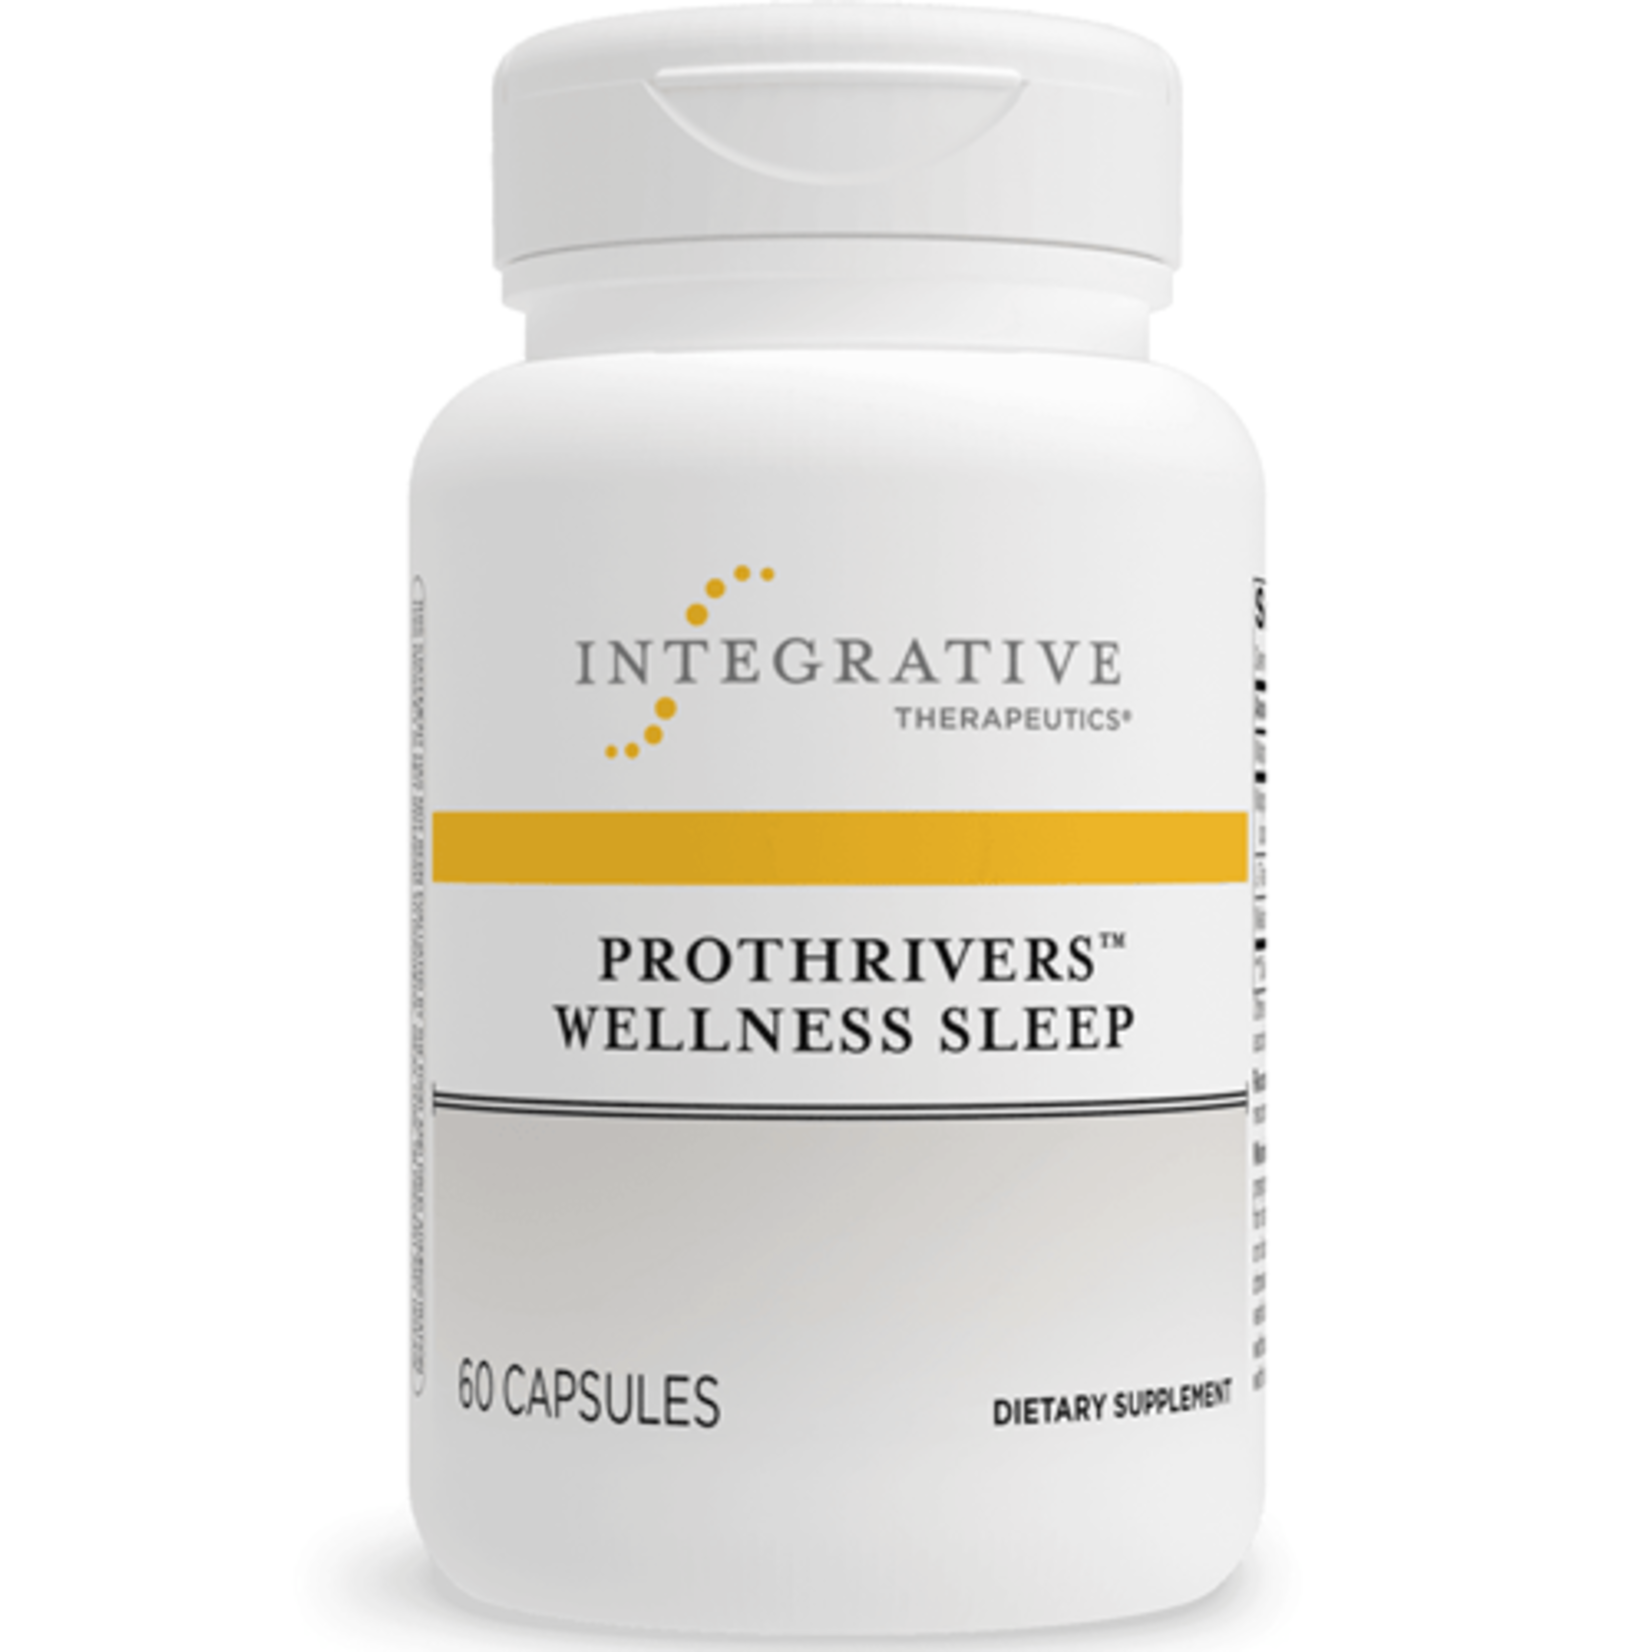 ProThrivers Wellness Sleep - 60caps (Integrative Therapeutics)